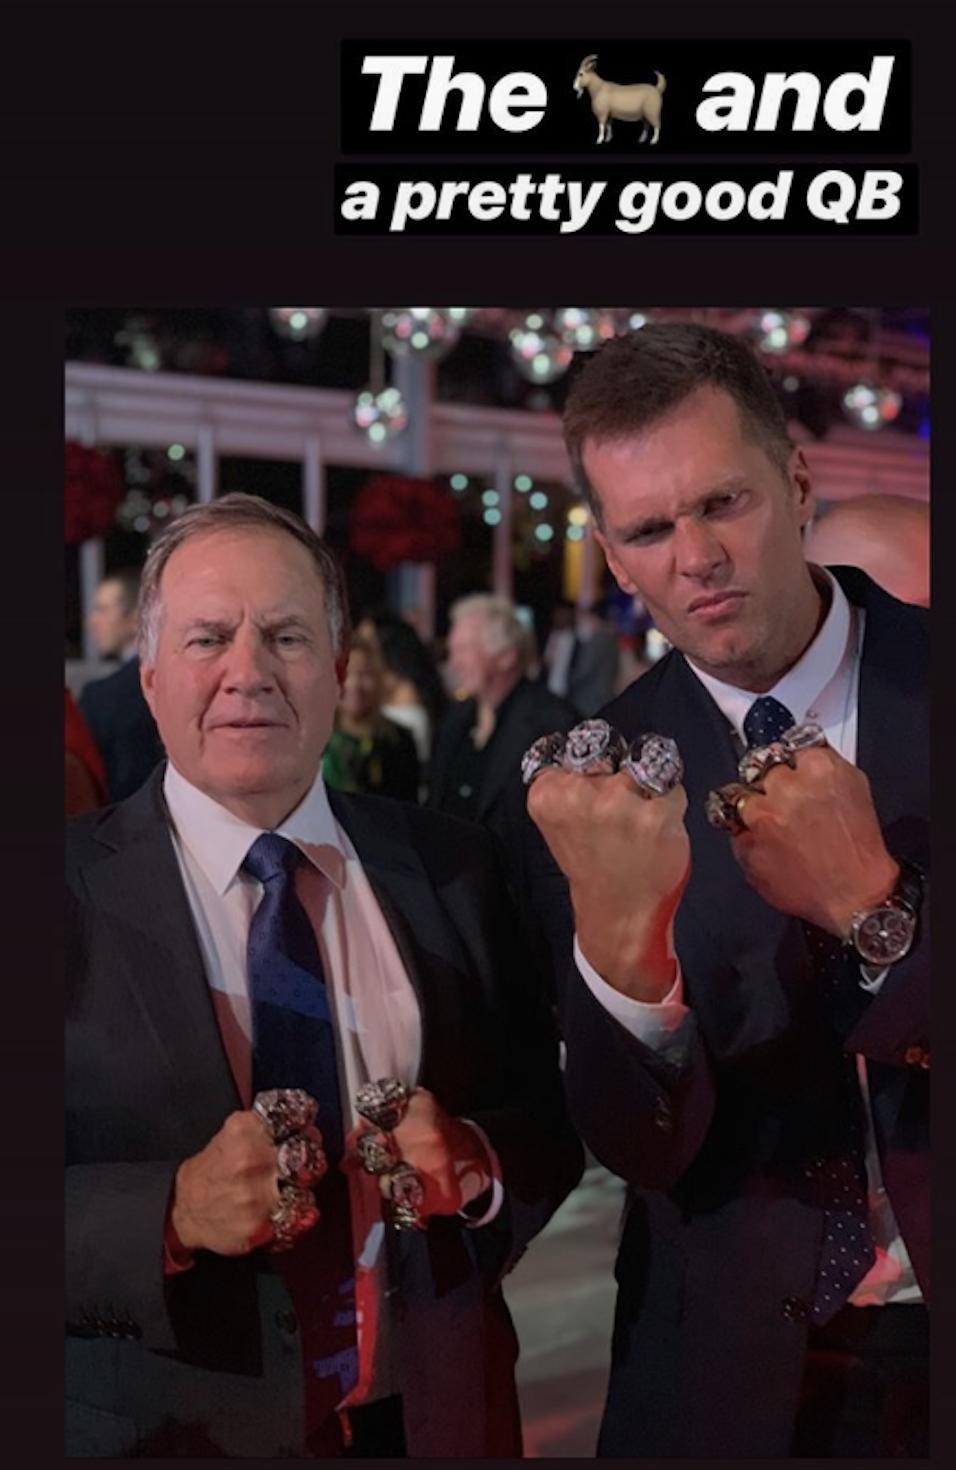 Allan Bell on Twitter: "14 Super Bowl rings between Bill Belichick and Tom  Brady. https://t.co/J4NJSdMCqZ" / Twitter